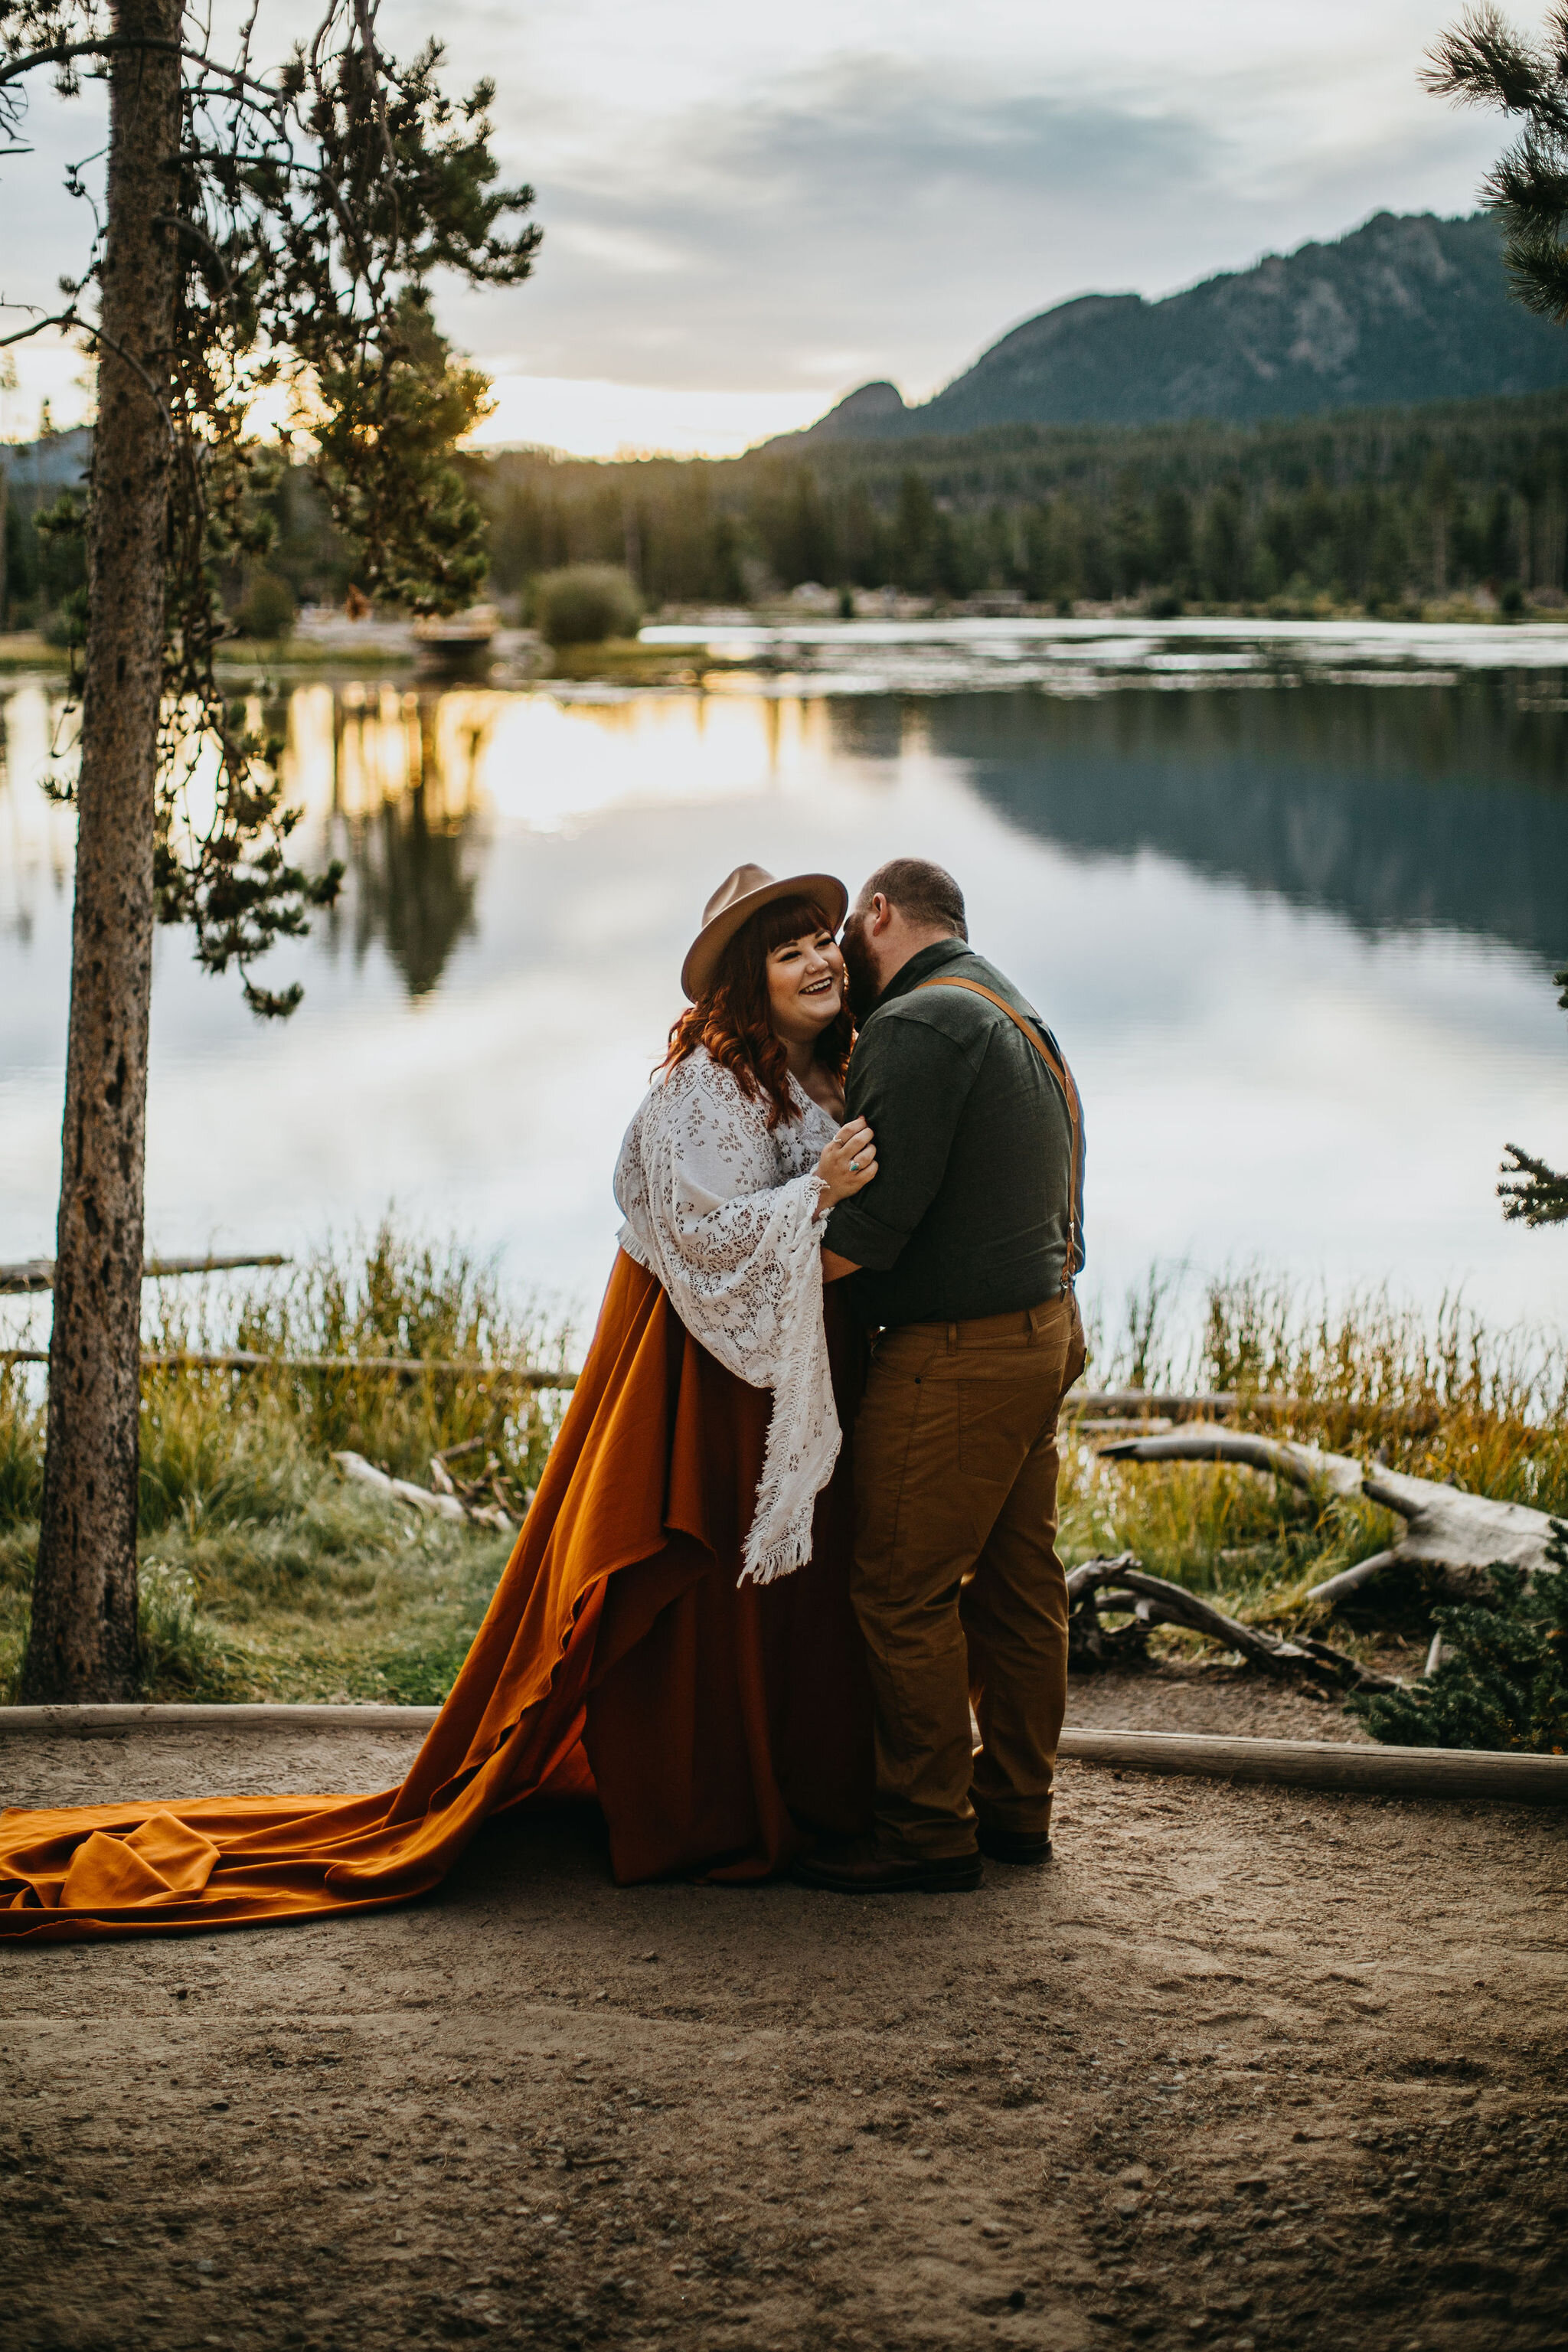 Denver, Colorado Adventure Wedding &amp; Elopement Photo/Video team Christina &amp; Jeremiah